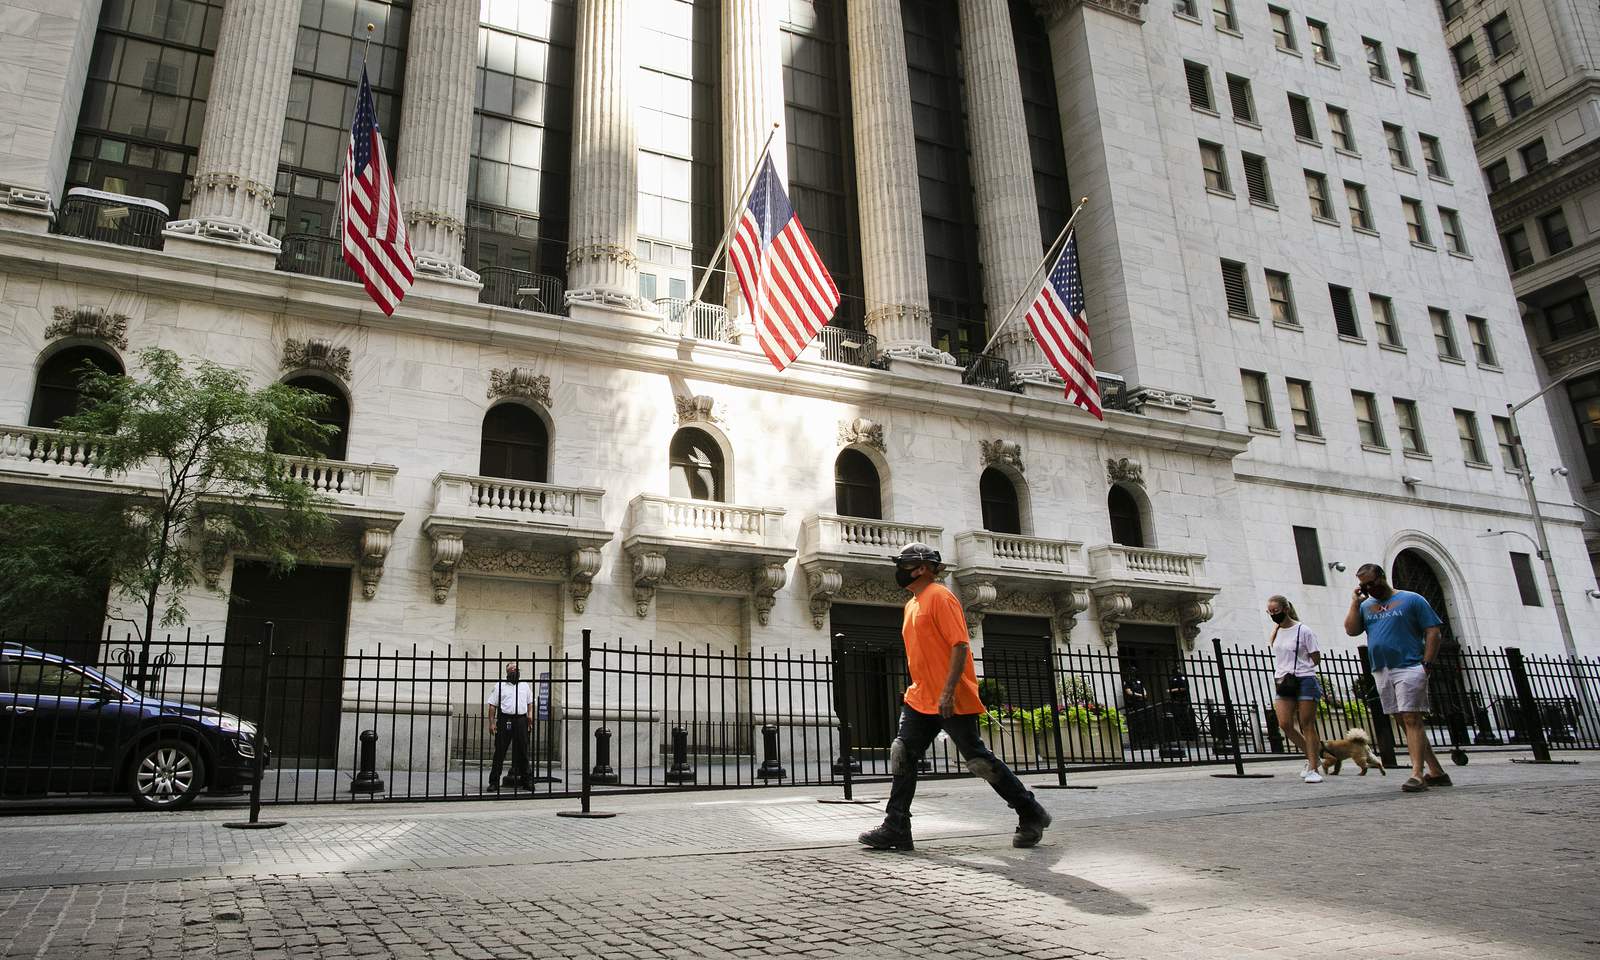 Tech losses drive Wall Street down again, ending grim week